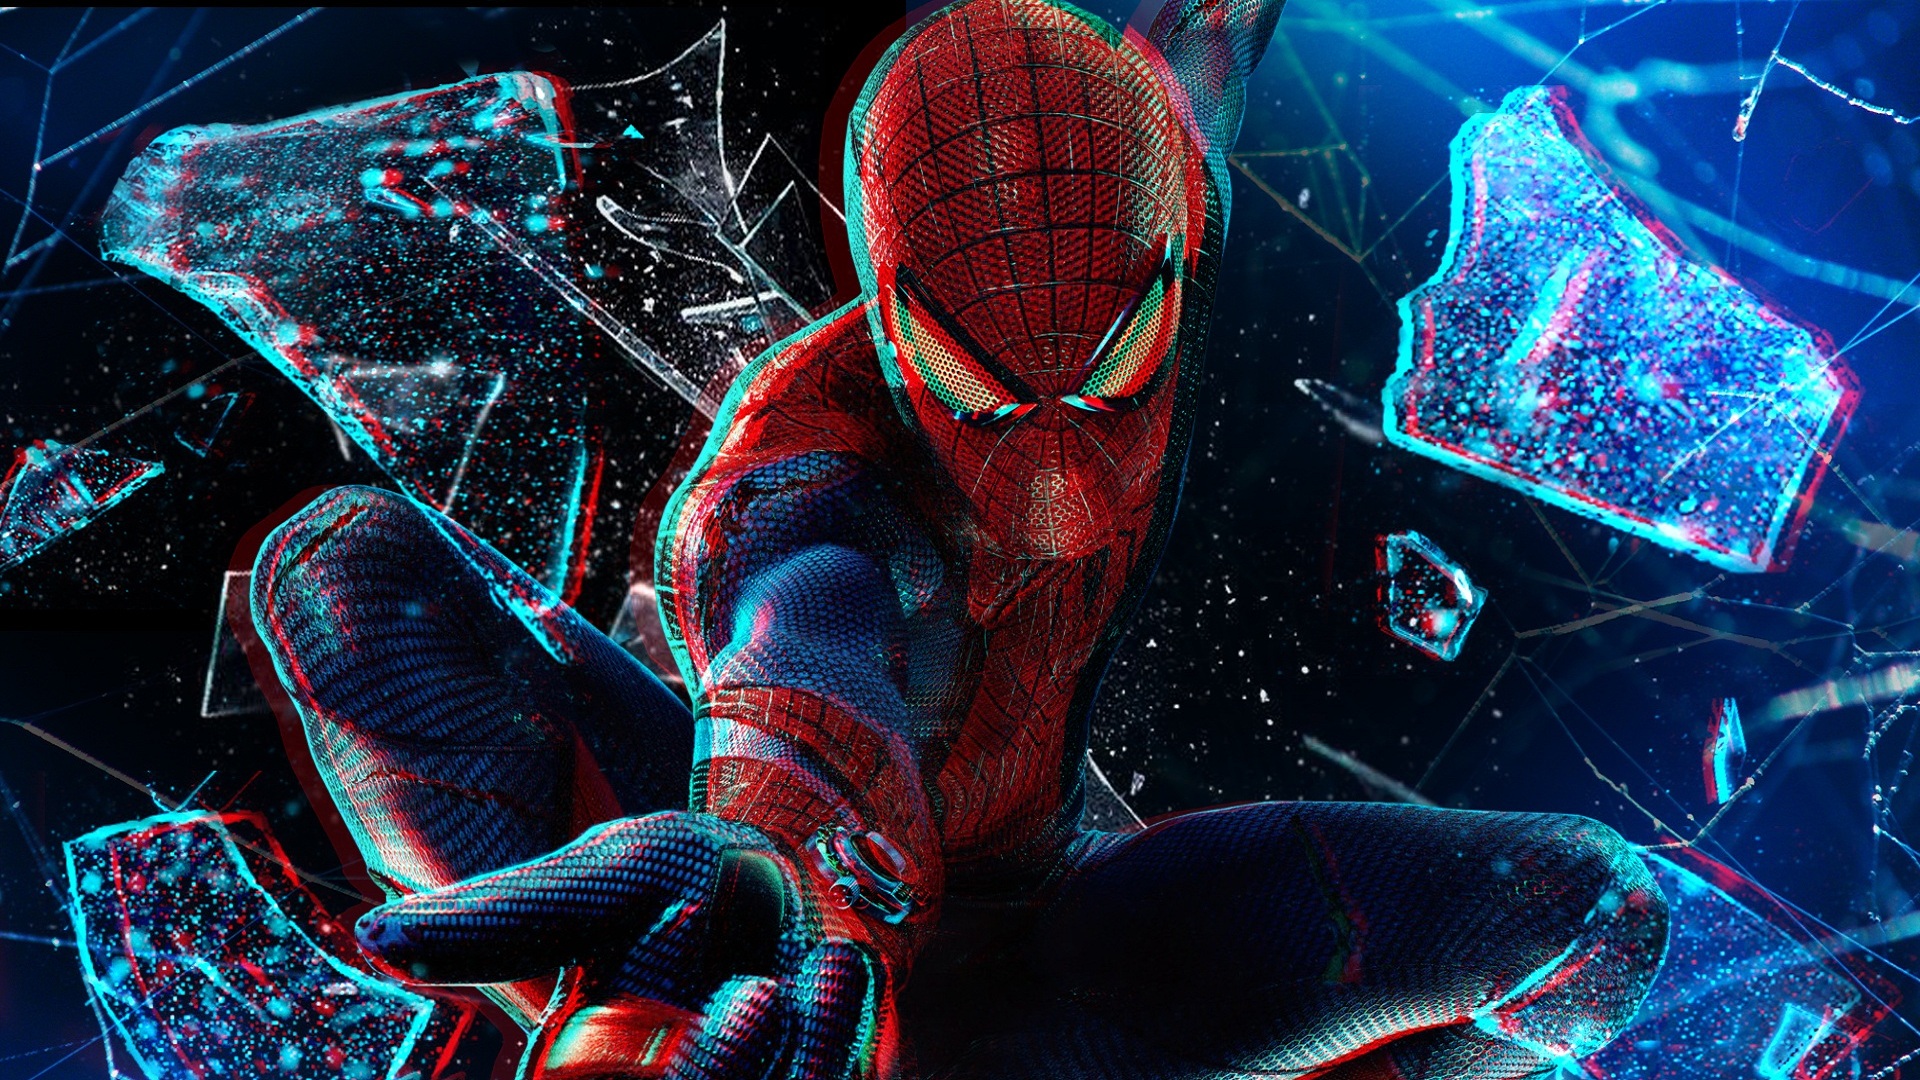 Spiderman 4 3d Wallpaper 1080p - Ndemok.com